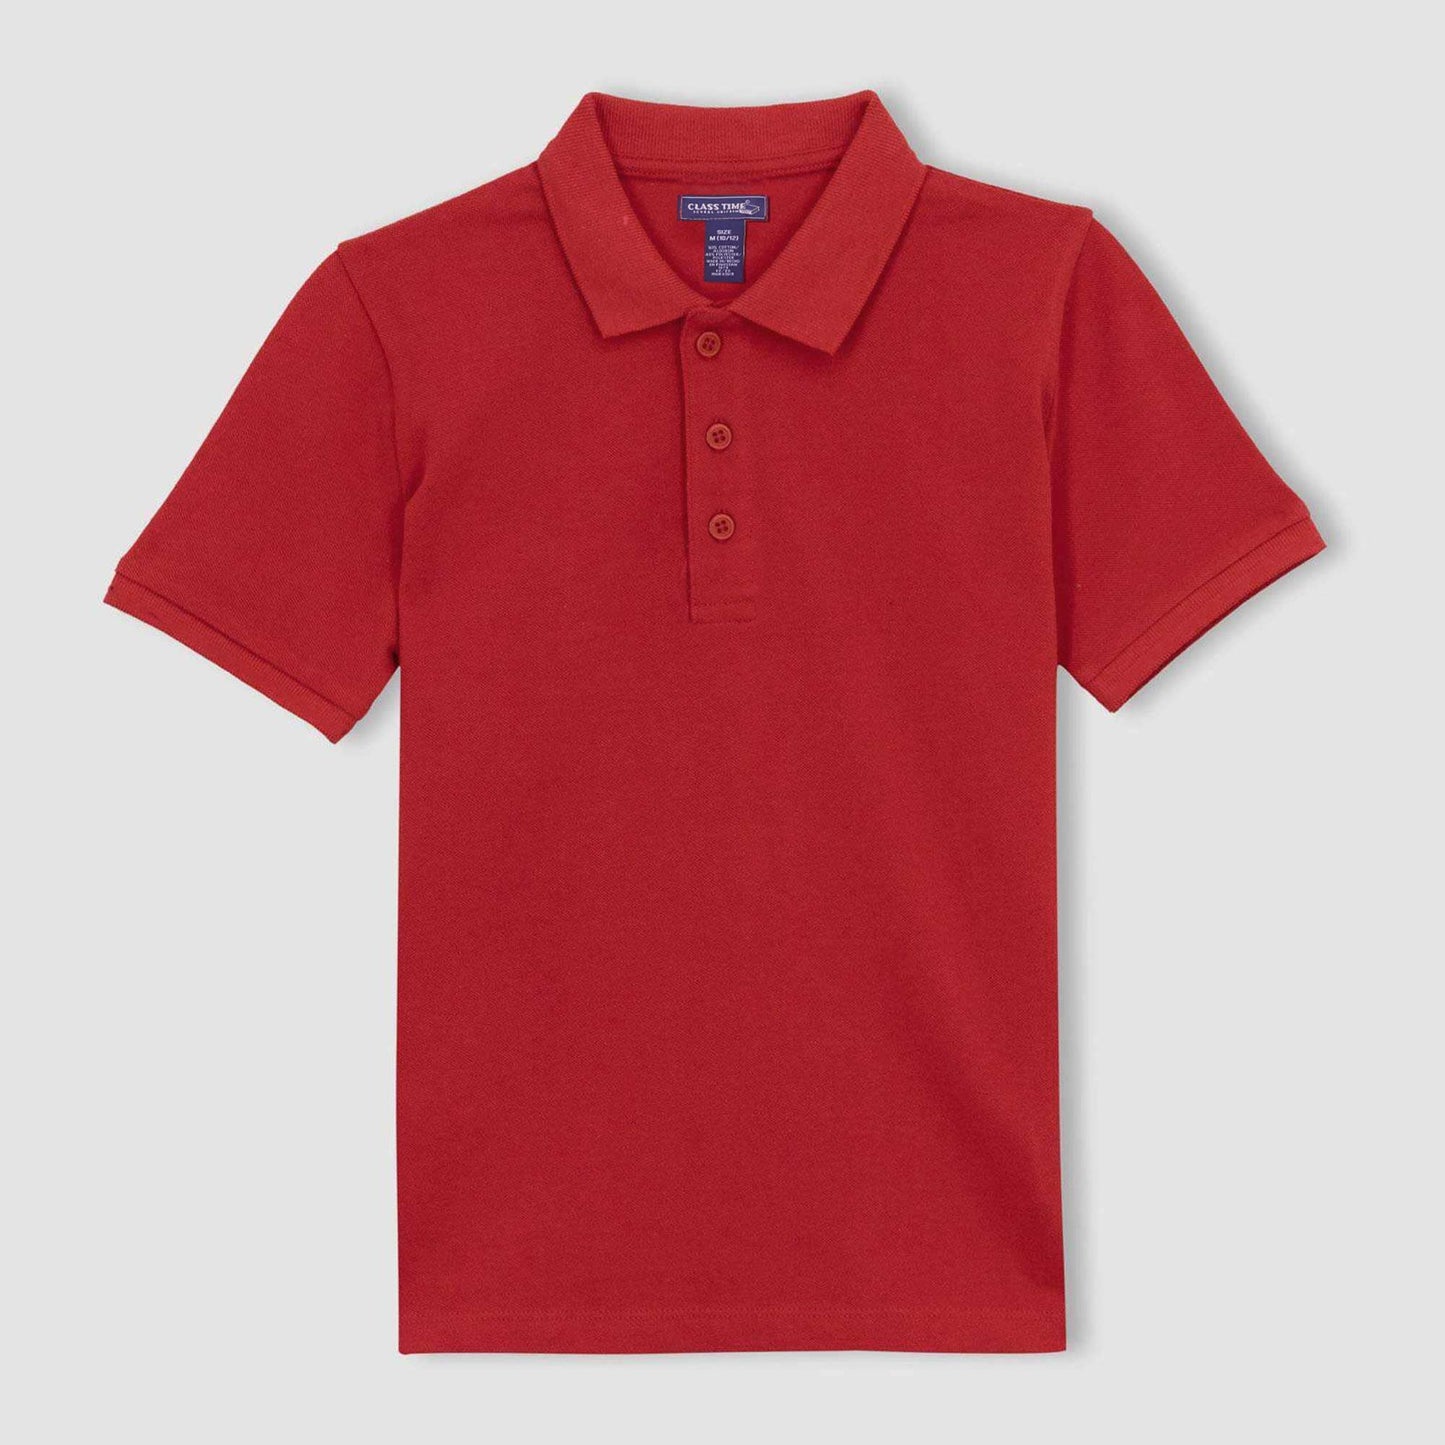 Class Time Boy's Short Sleeve Pique Polo Shirt Red